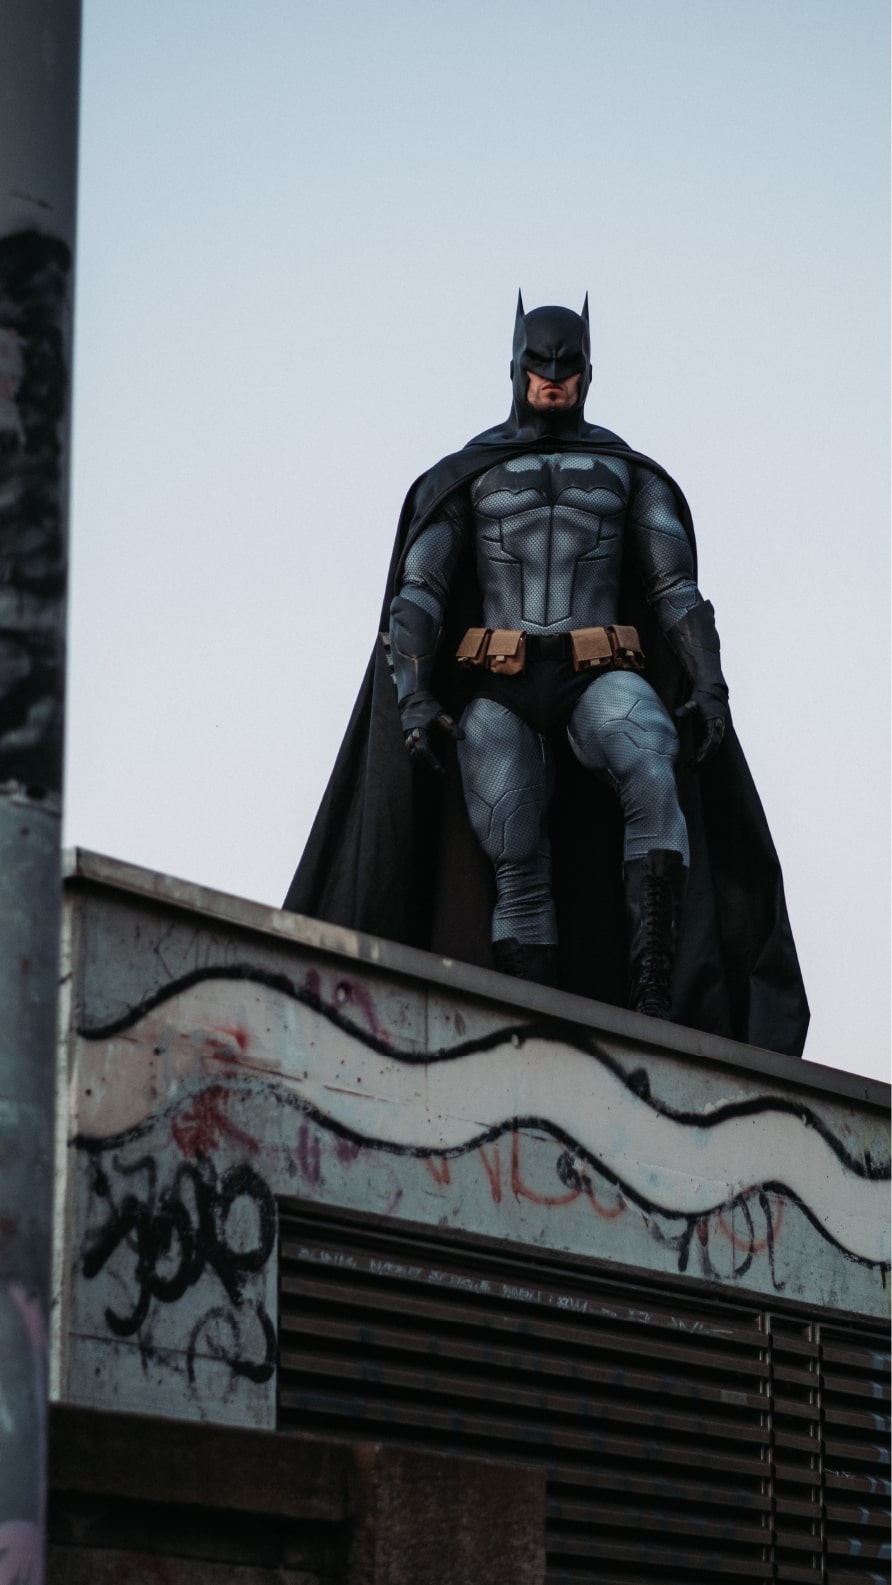 iPhone wallpapers featuring Batman